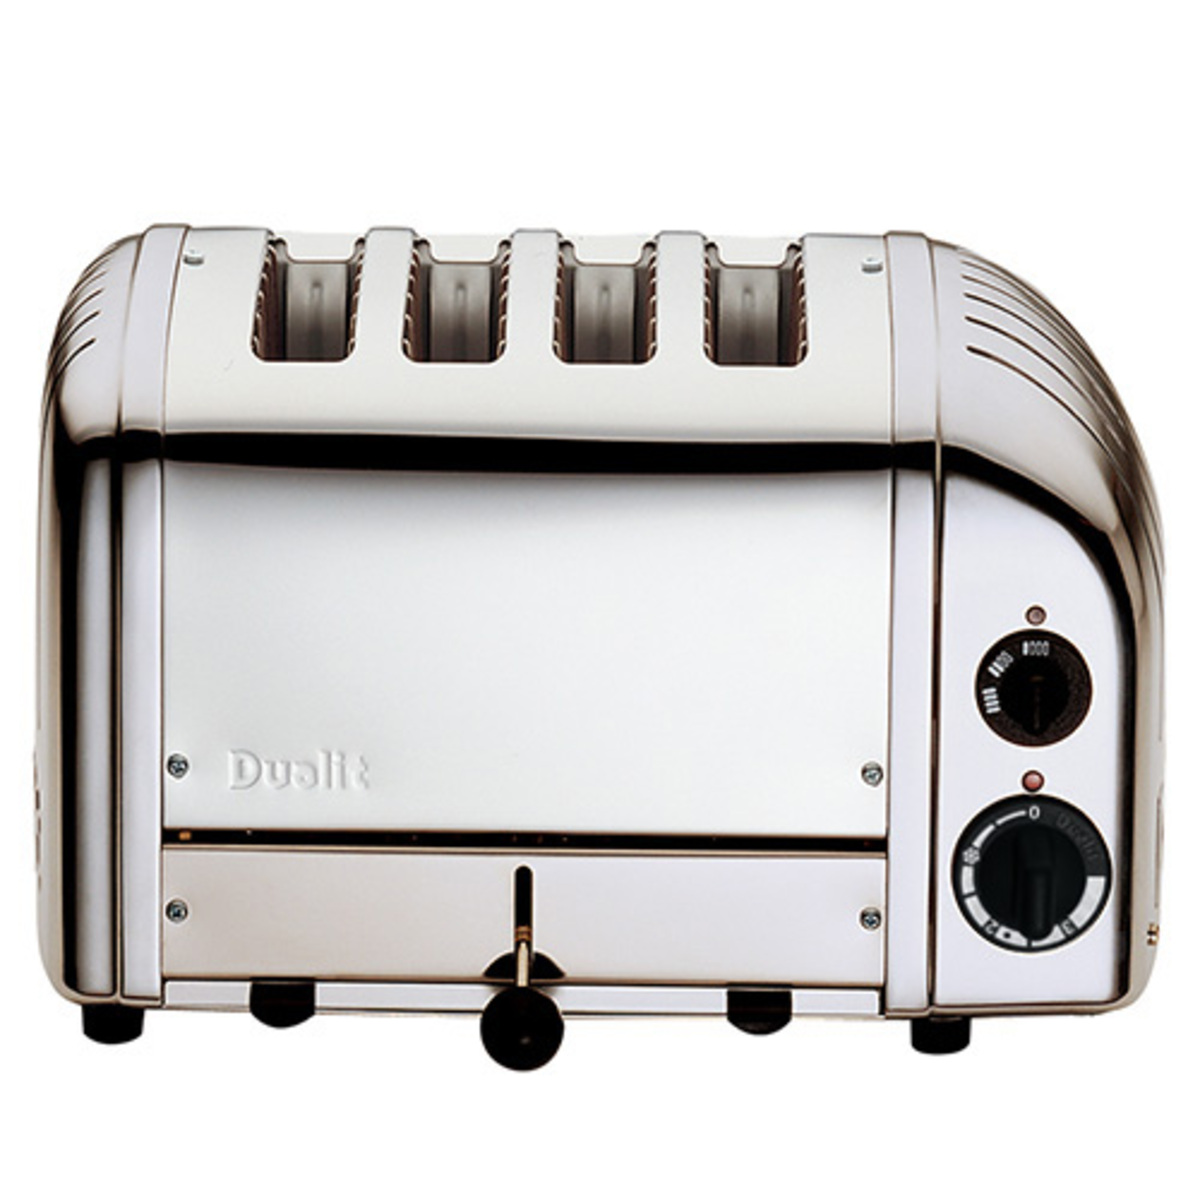 Dualit 40378 Classic Vario AWS 4 Slot Toaster, Polished